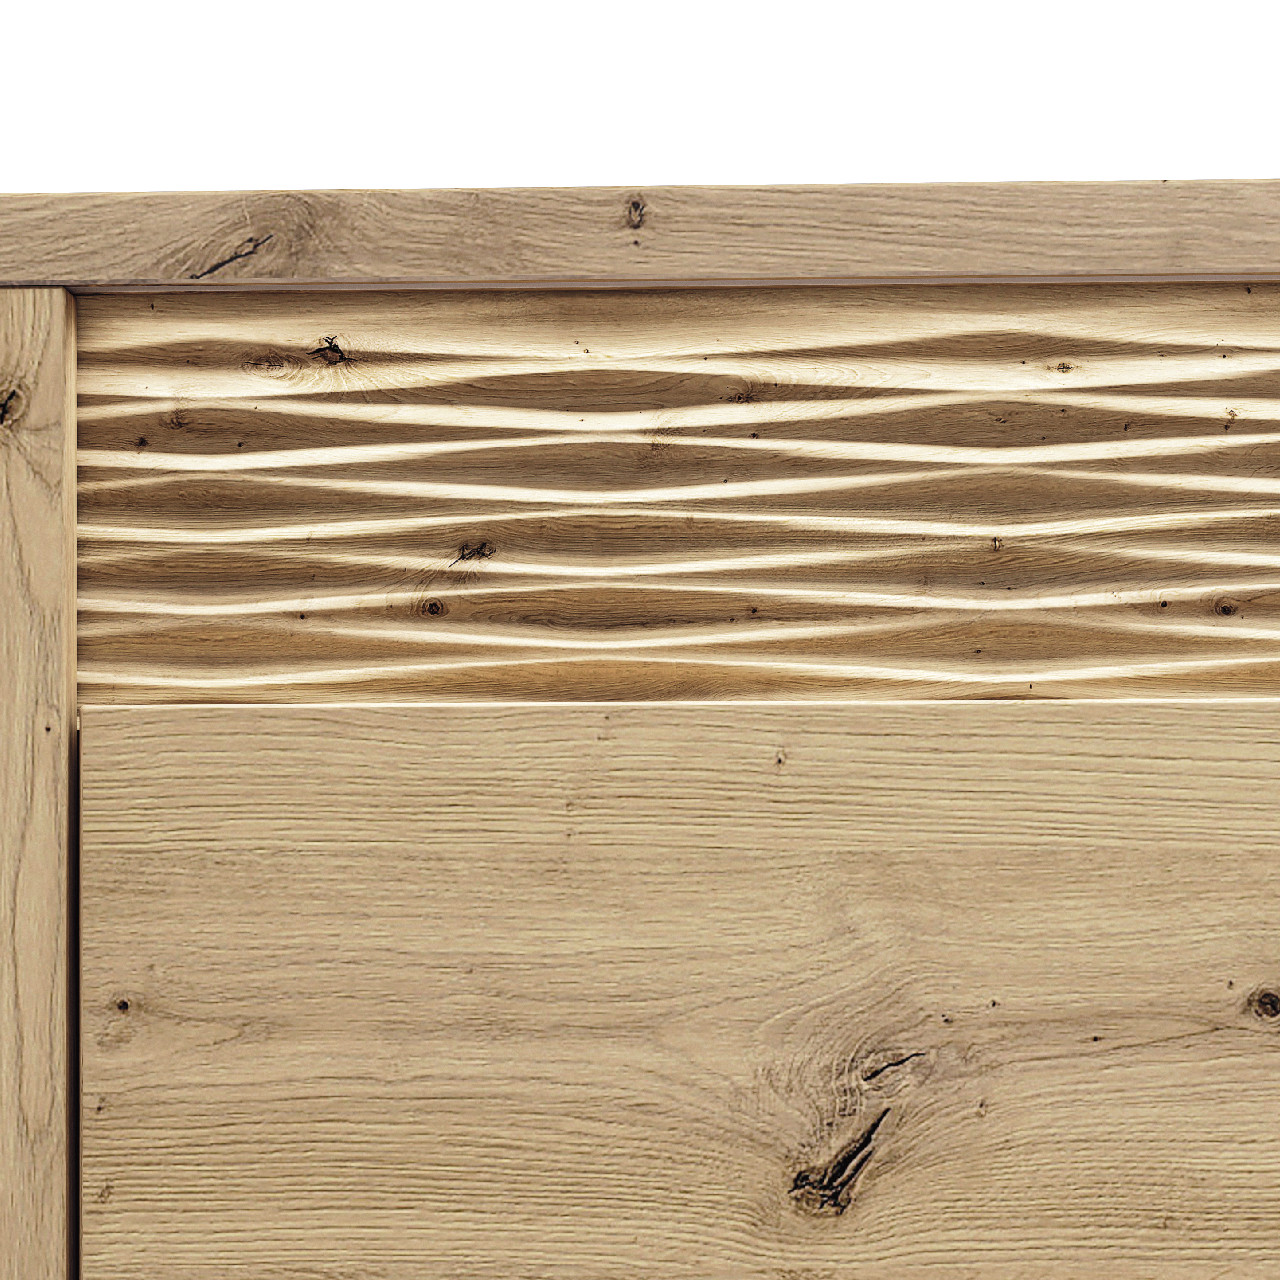 Storage cabinet ARTAS AR09 artisan oak